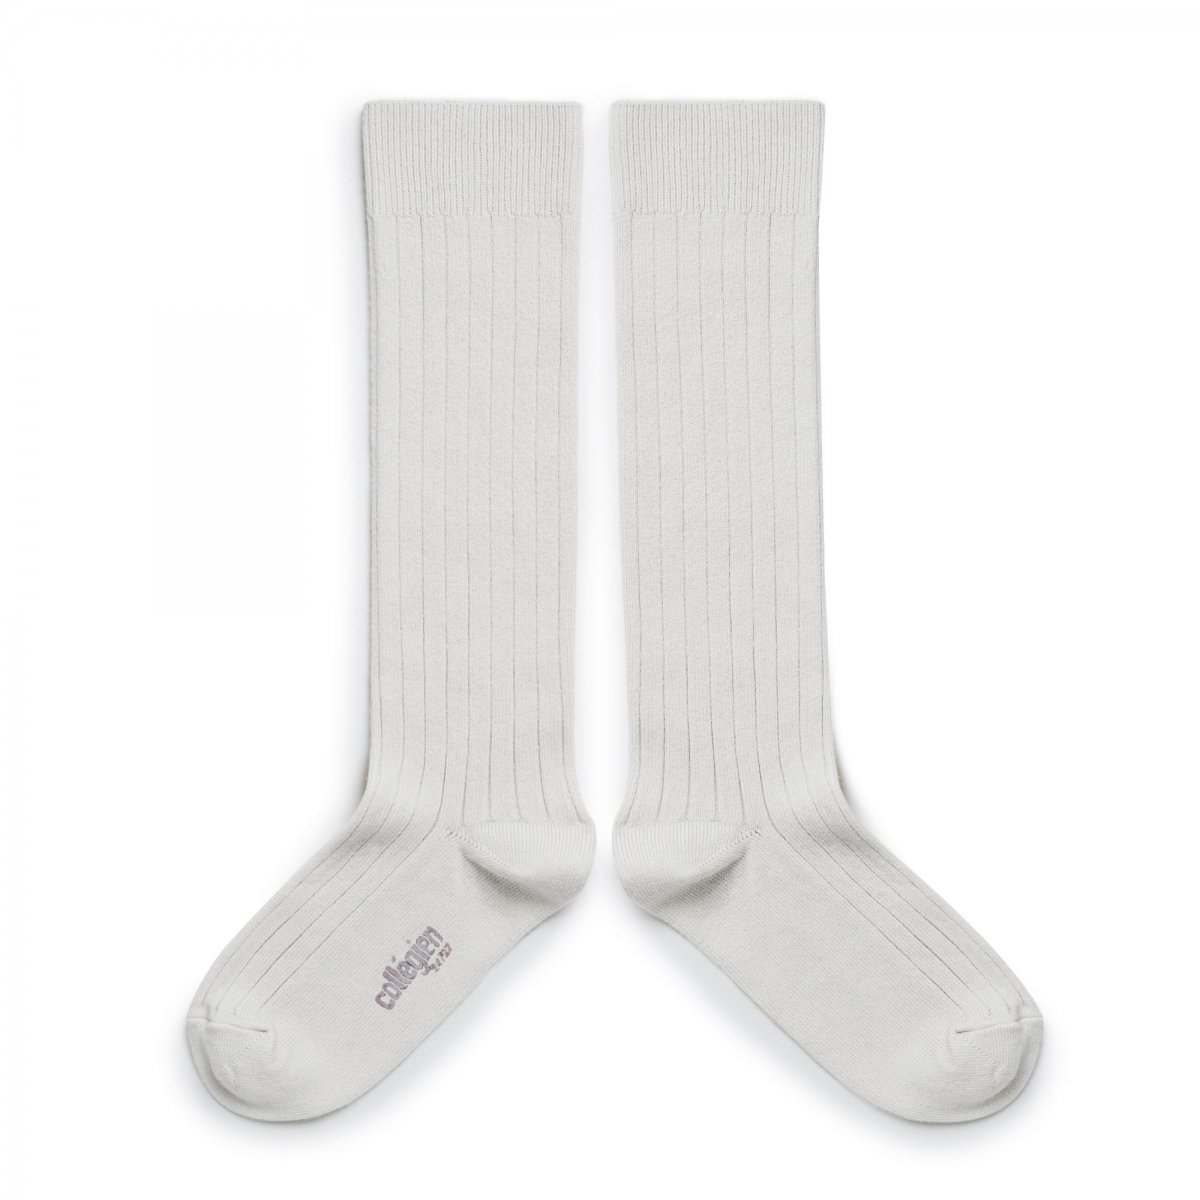 Collégien - Knee high socks La Haute blanc neige - Medias y calcetines - 2950 908 La Haute 